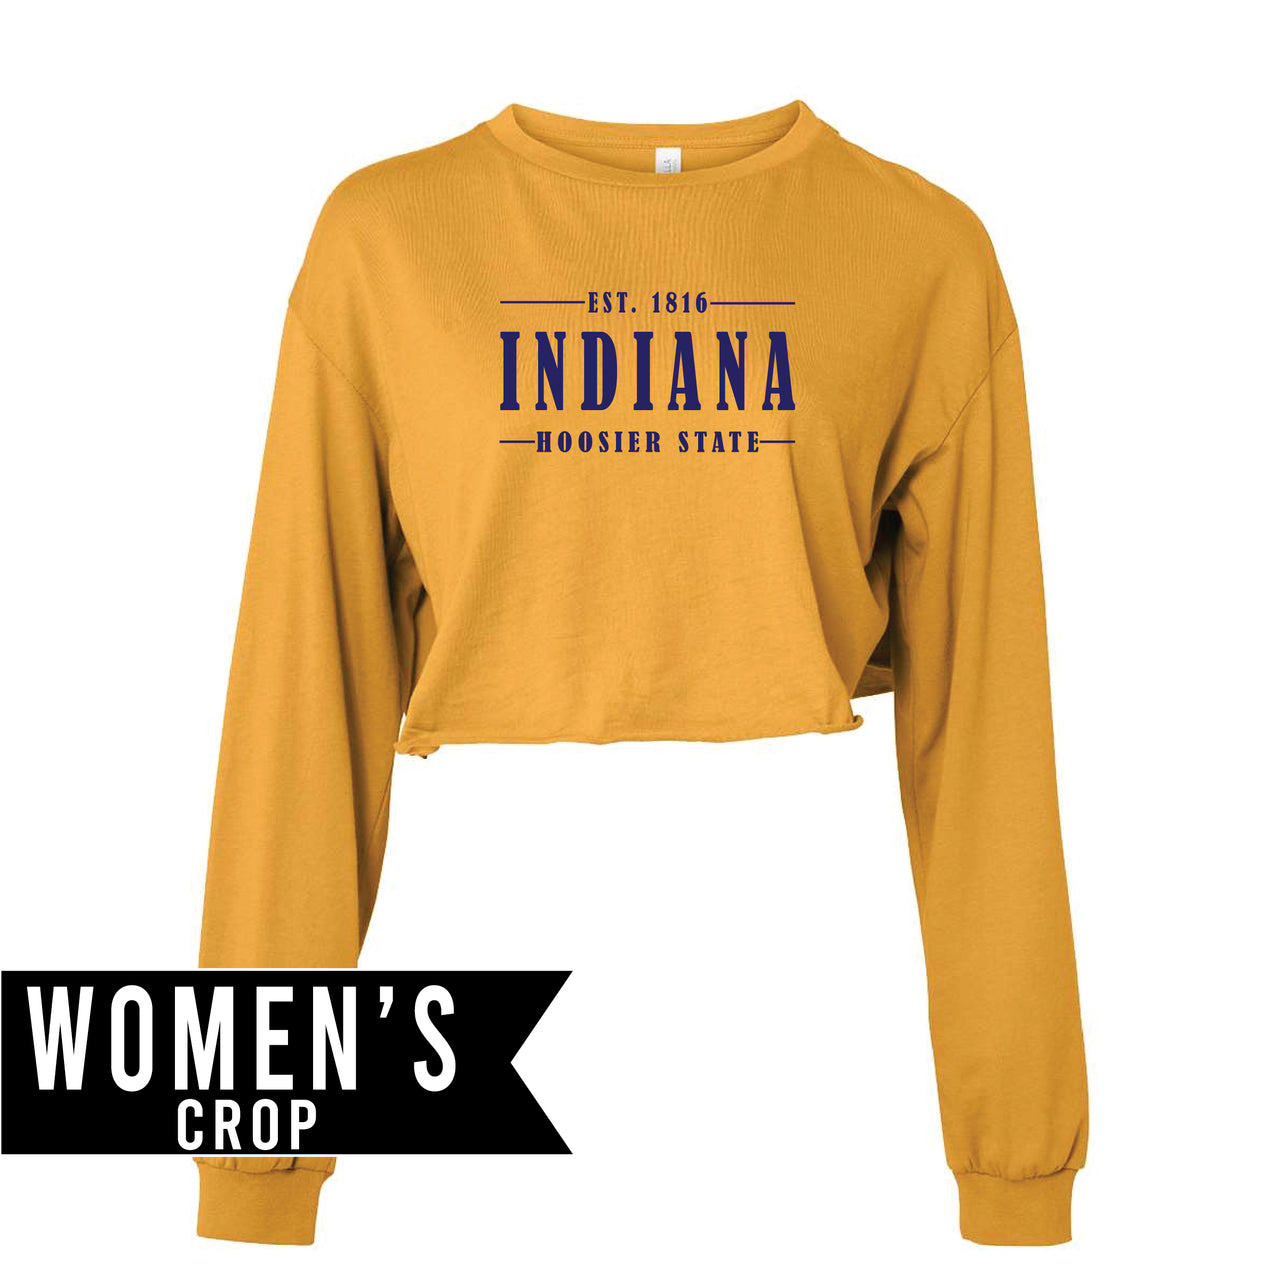 Fashion Women's Crop Long Sleeve Tee - Indiana 1816